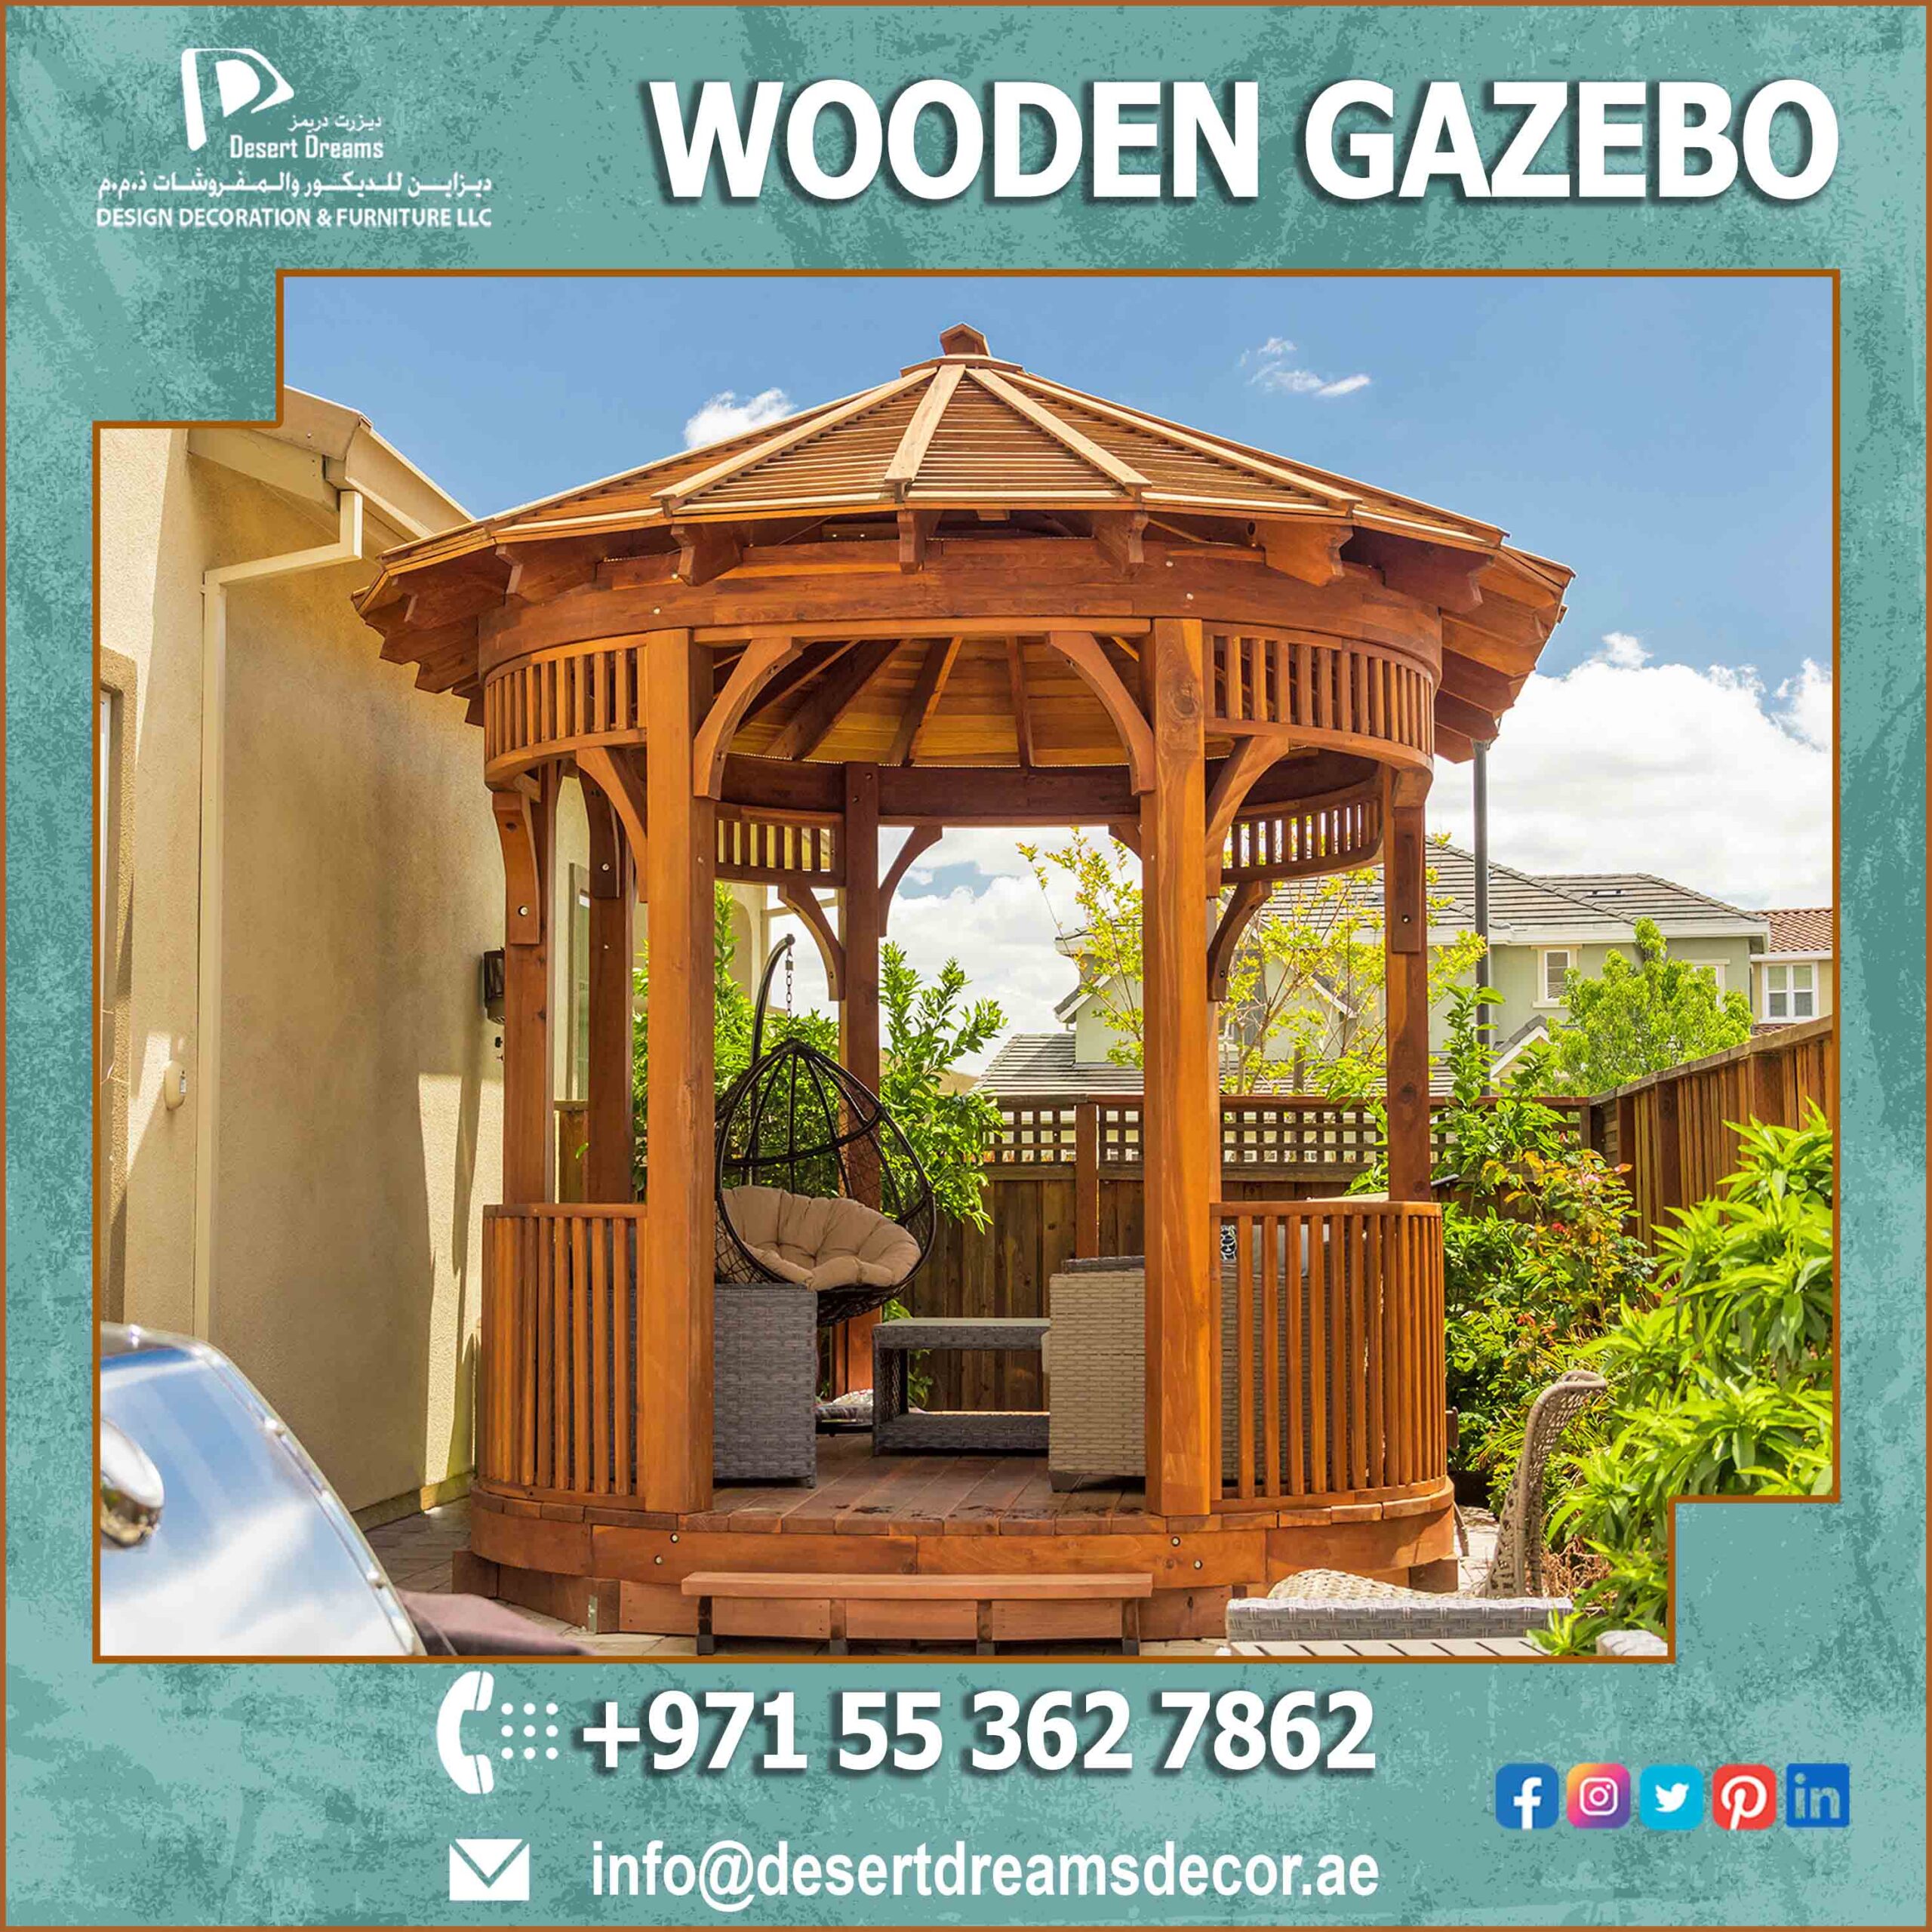 Wooden Gazebo with Flooring in Uae | Solid Wood Gazebo.